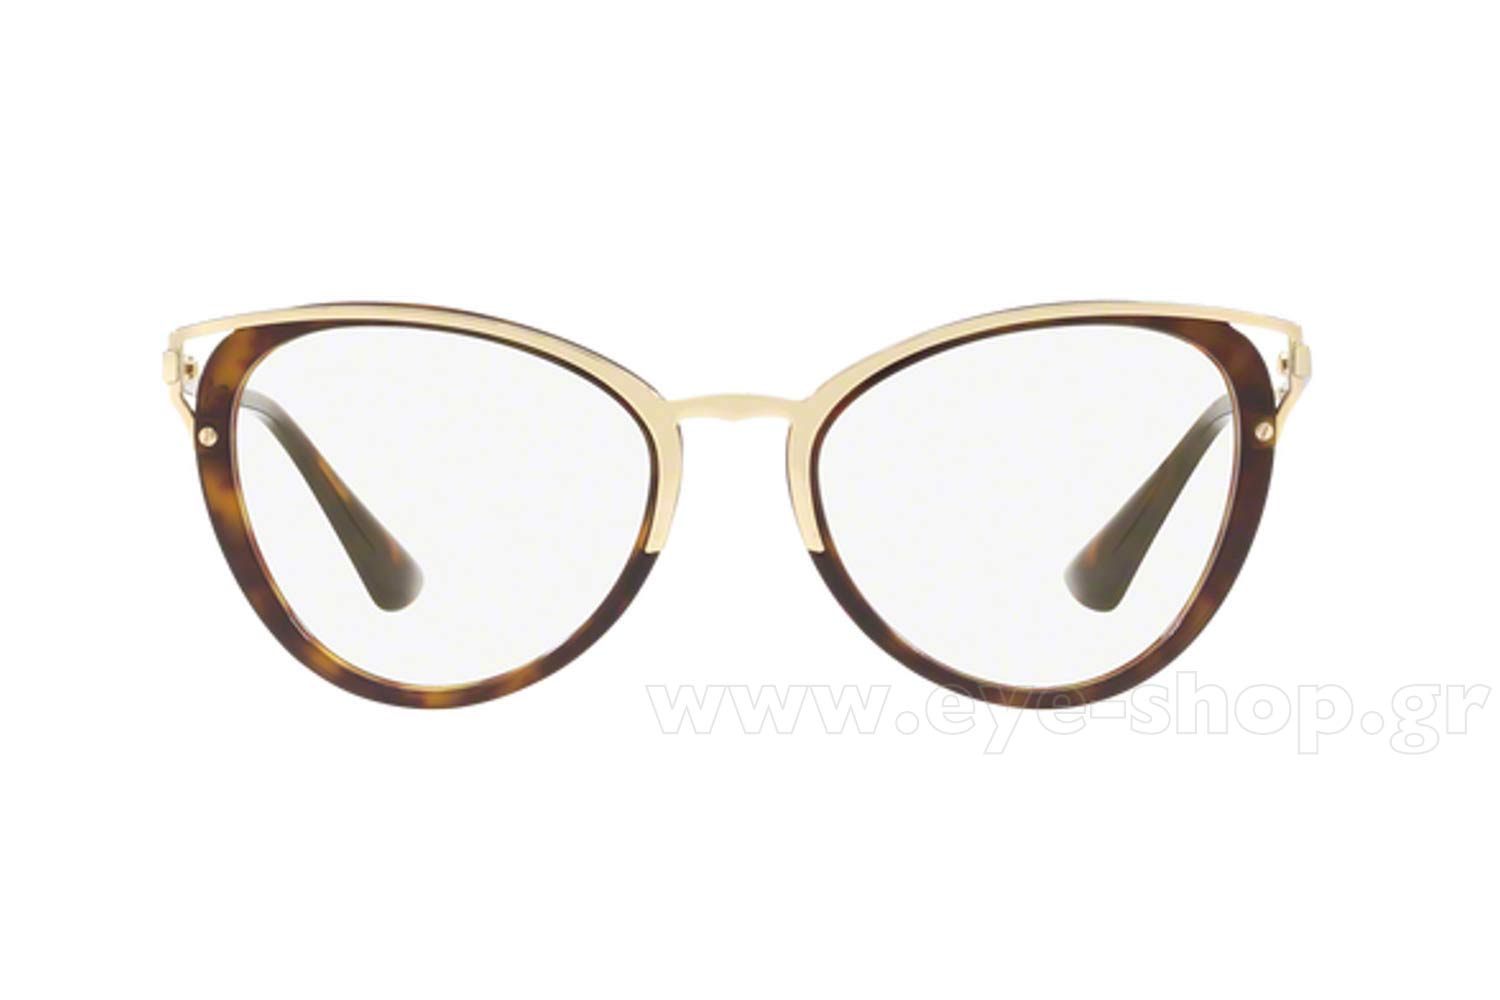 prada glasses frames 2019